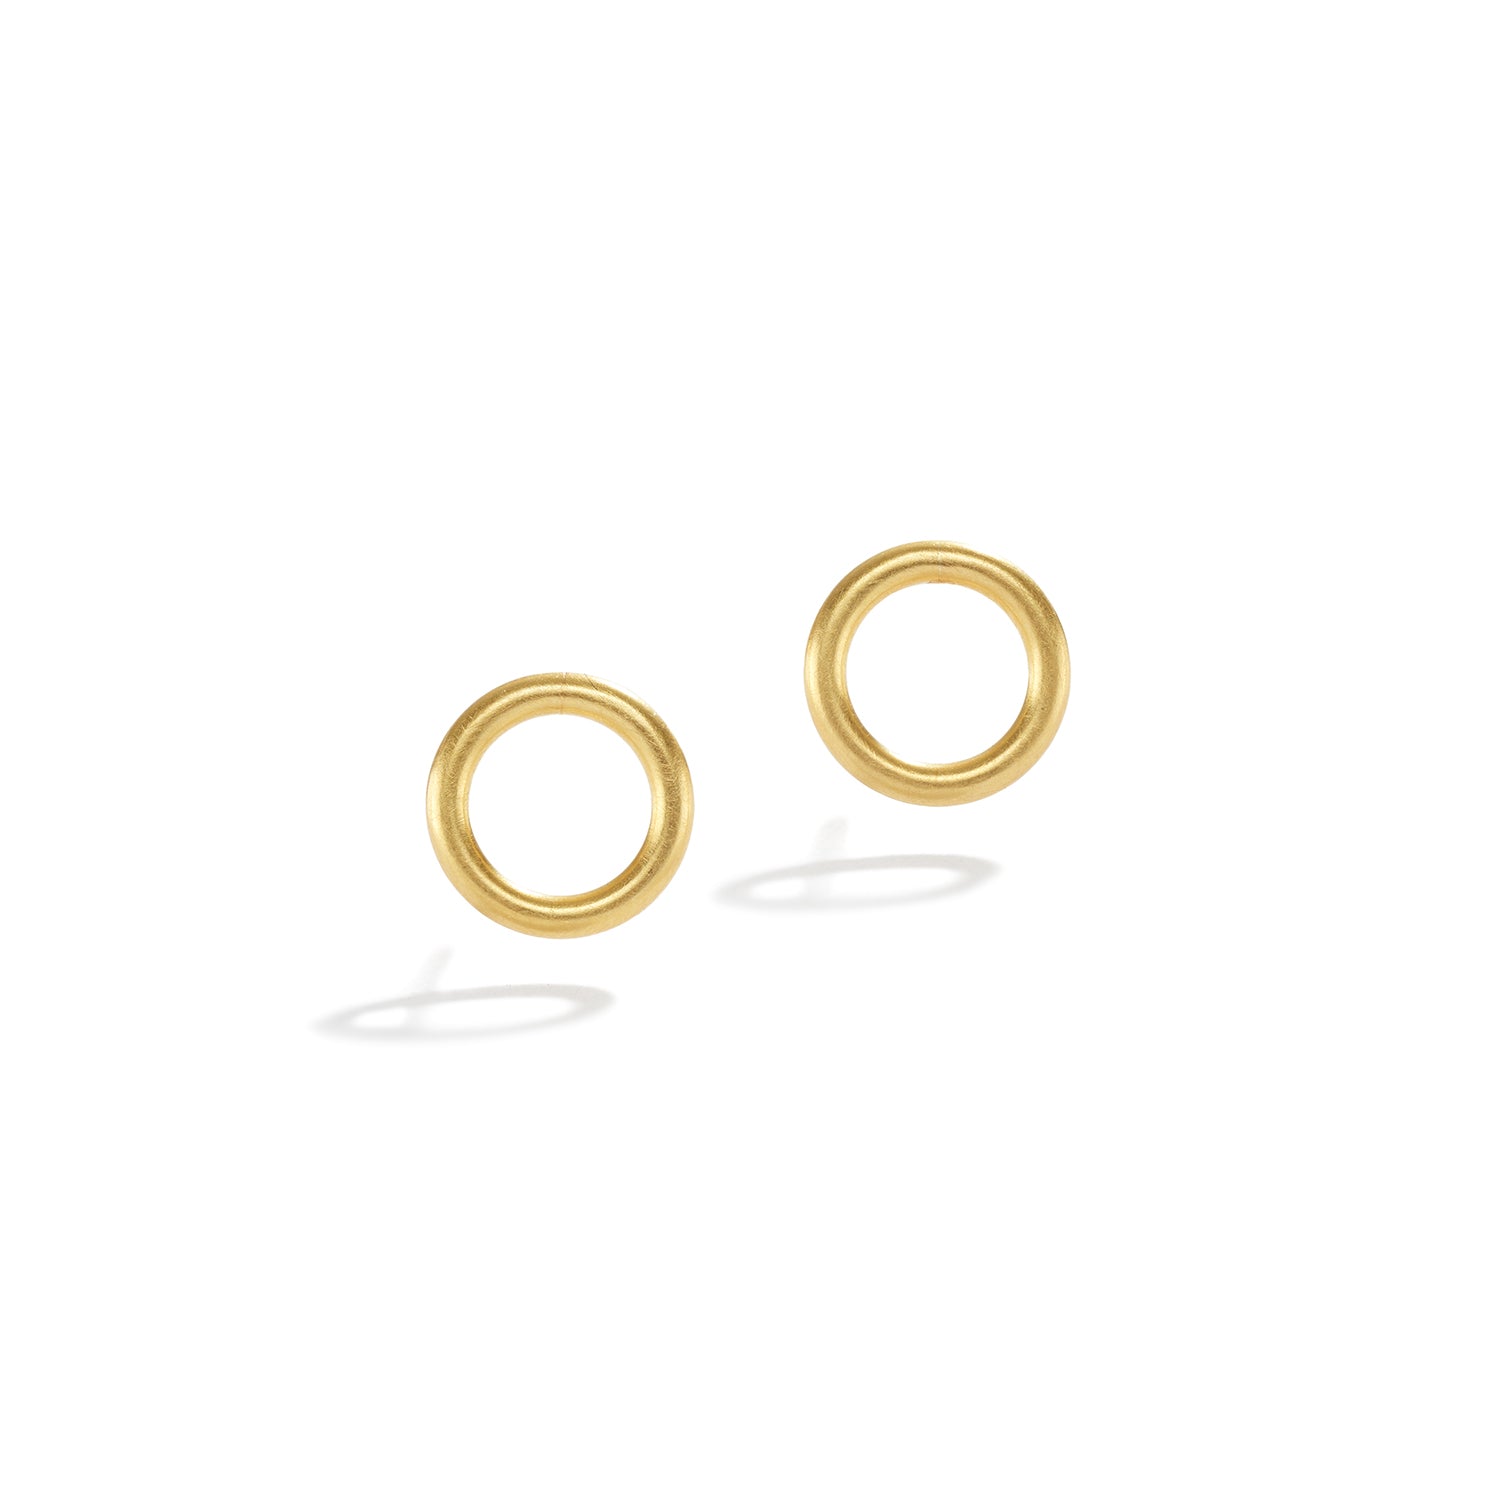 18K Yellow Gold Circle Earrings